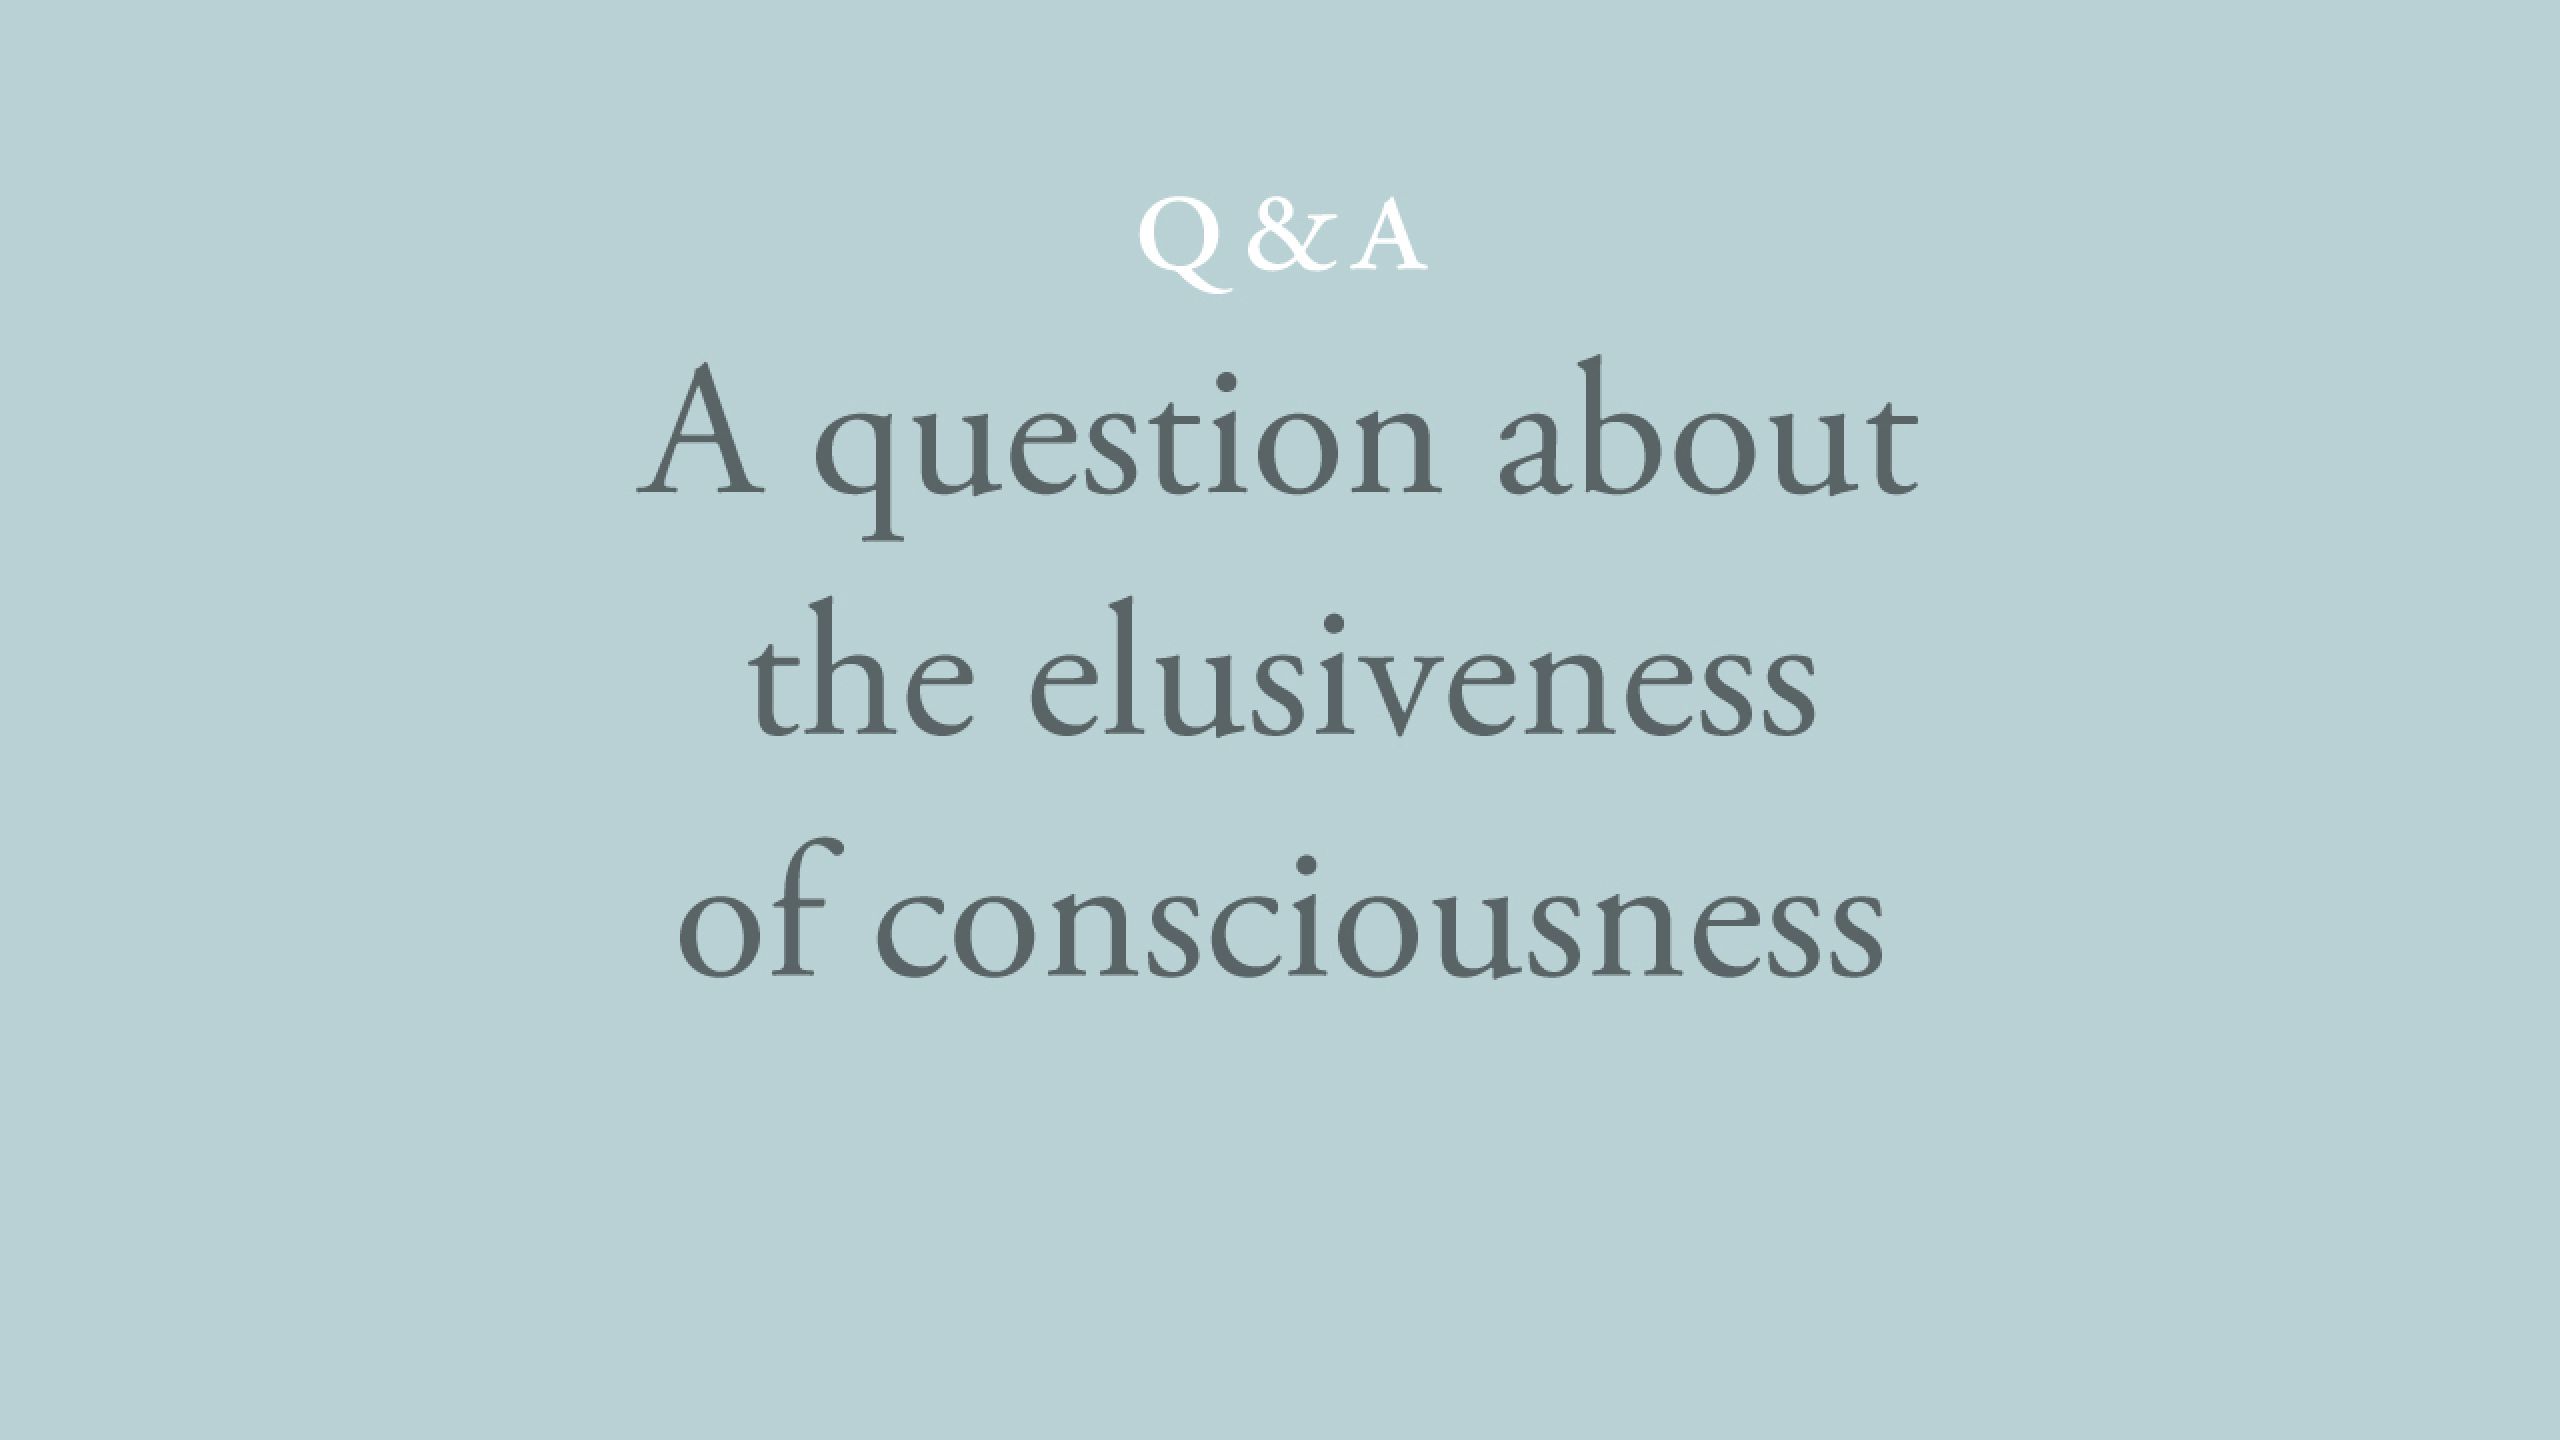 Is consciousness elusive?